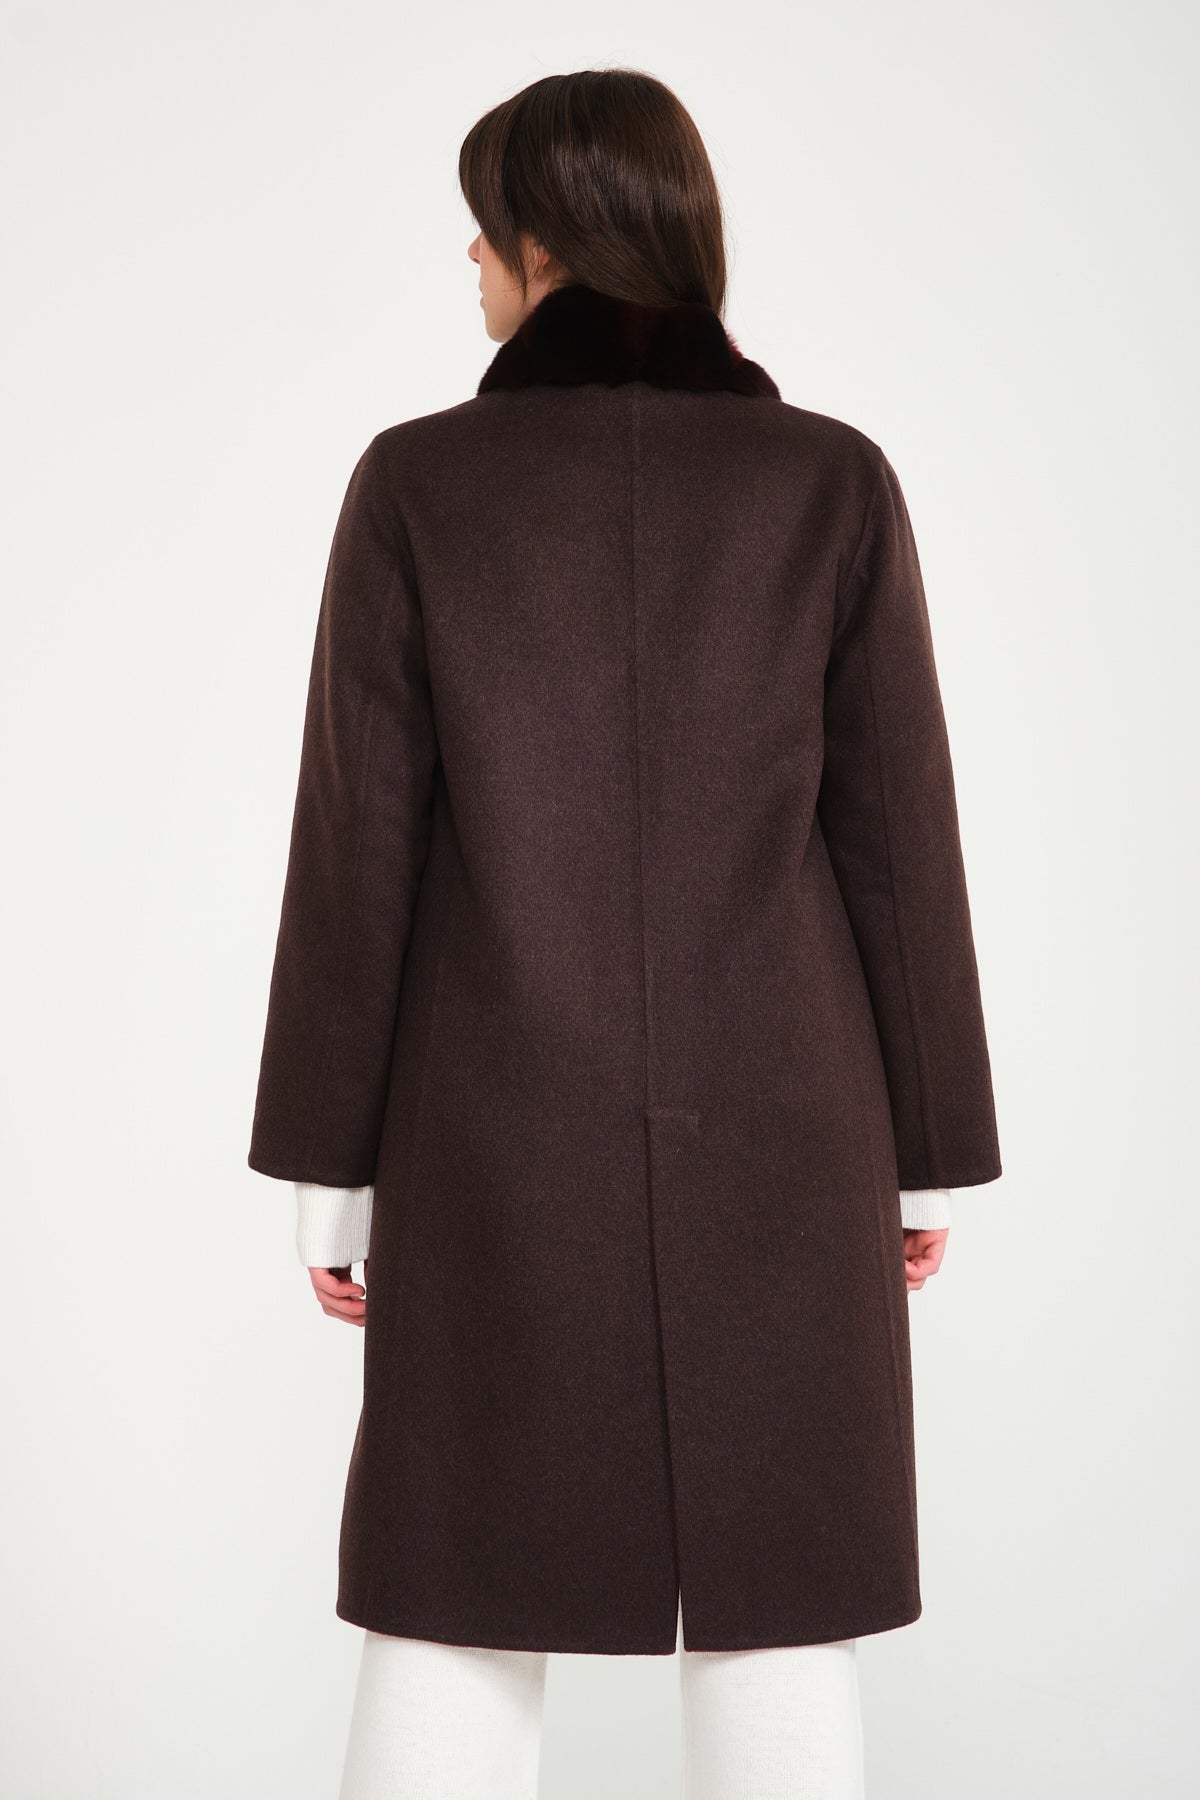 Burgundy / Brown Double Face Long Cashmere Coat